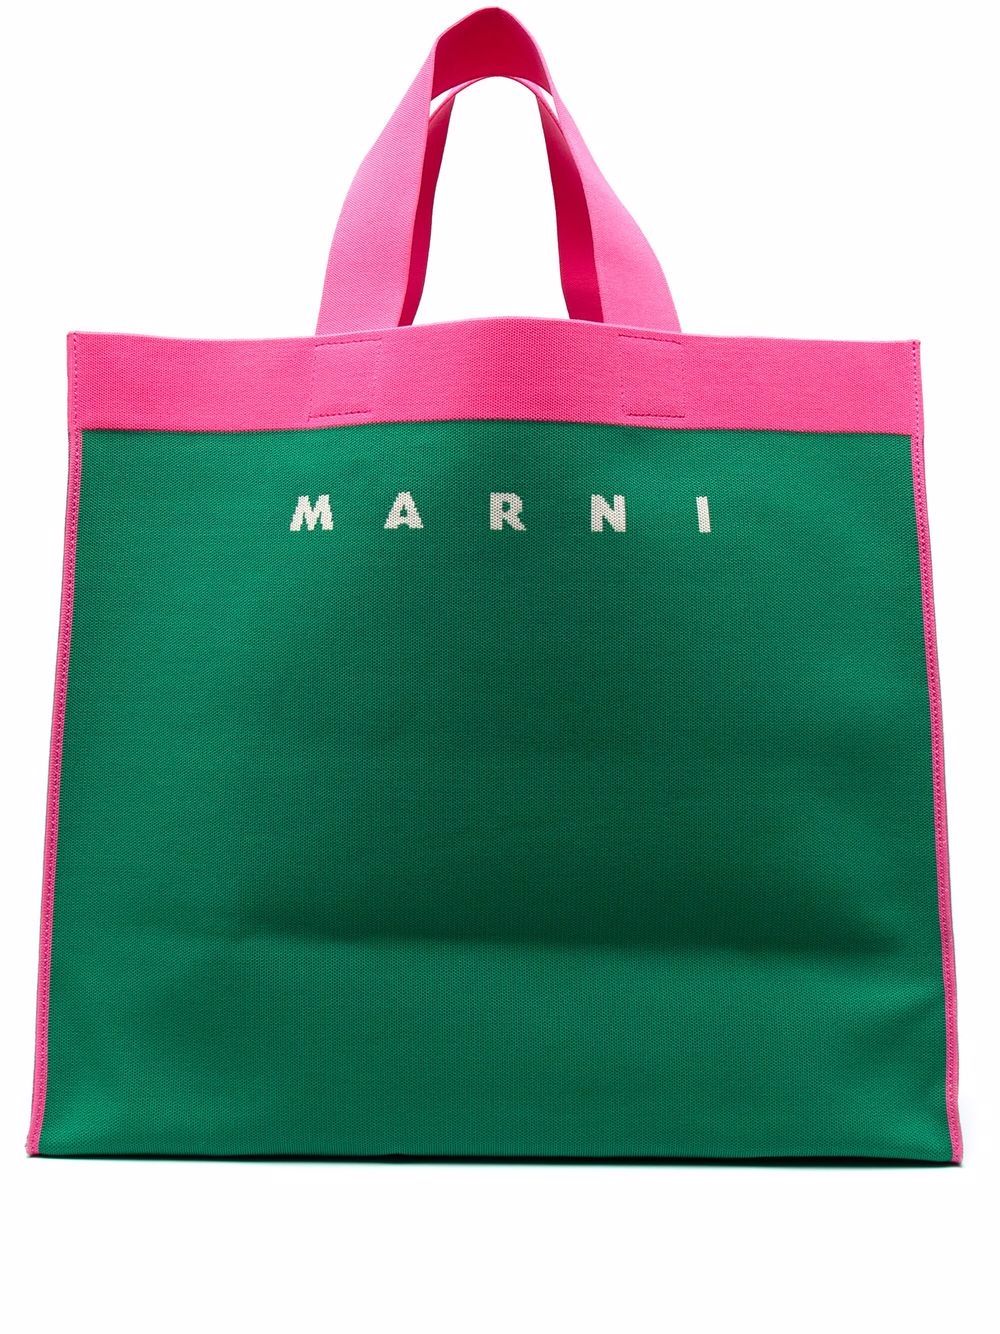 Marni logo-printed tote bag - Green von Marni